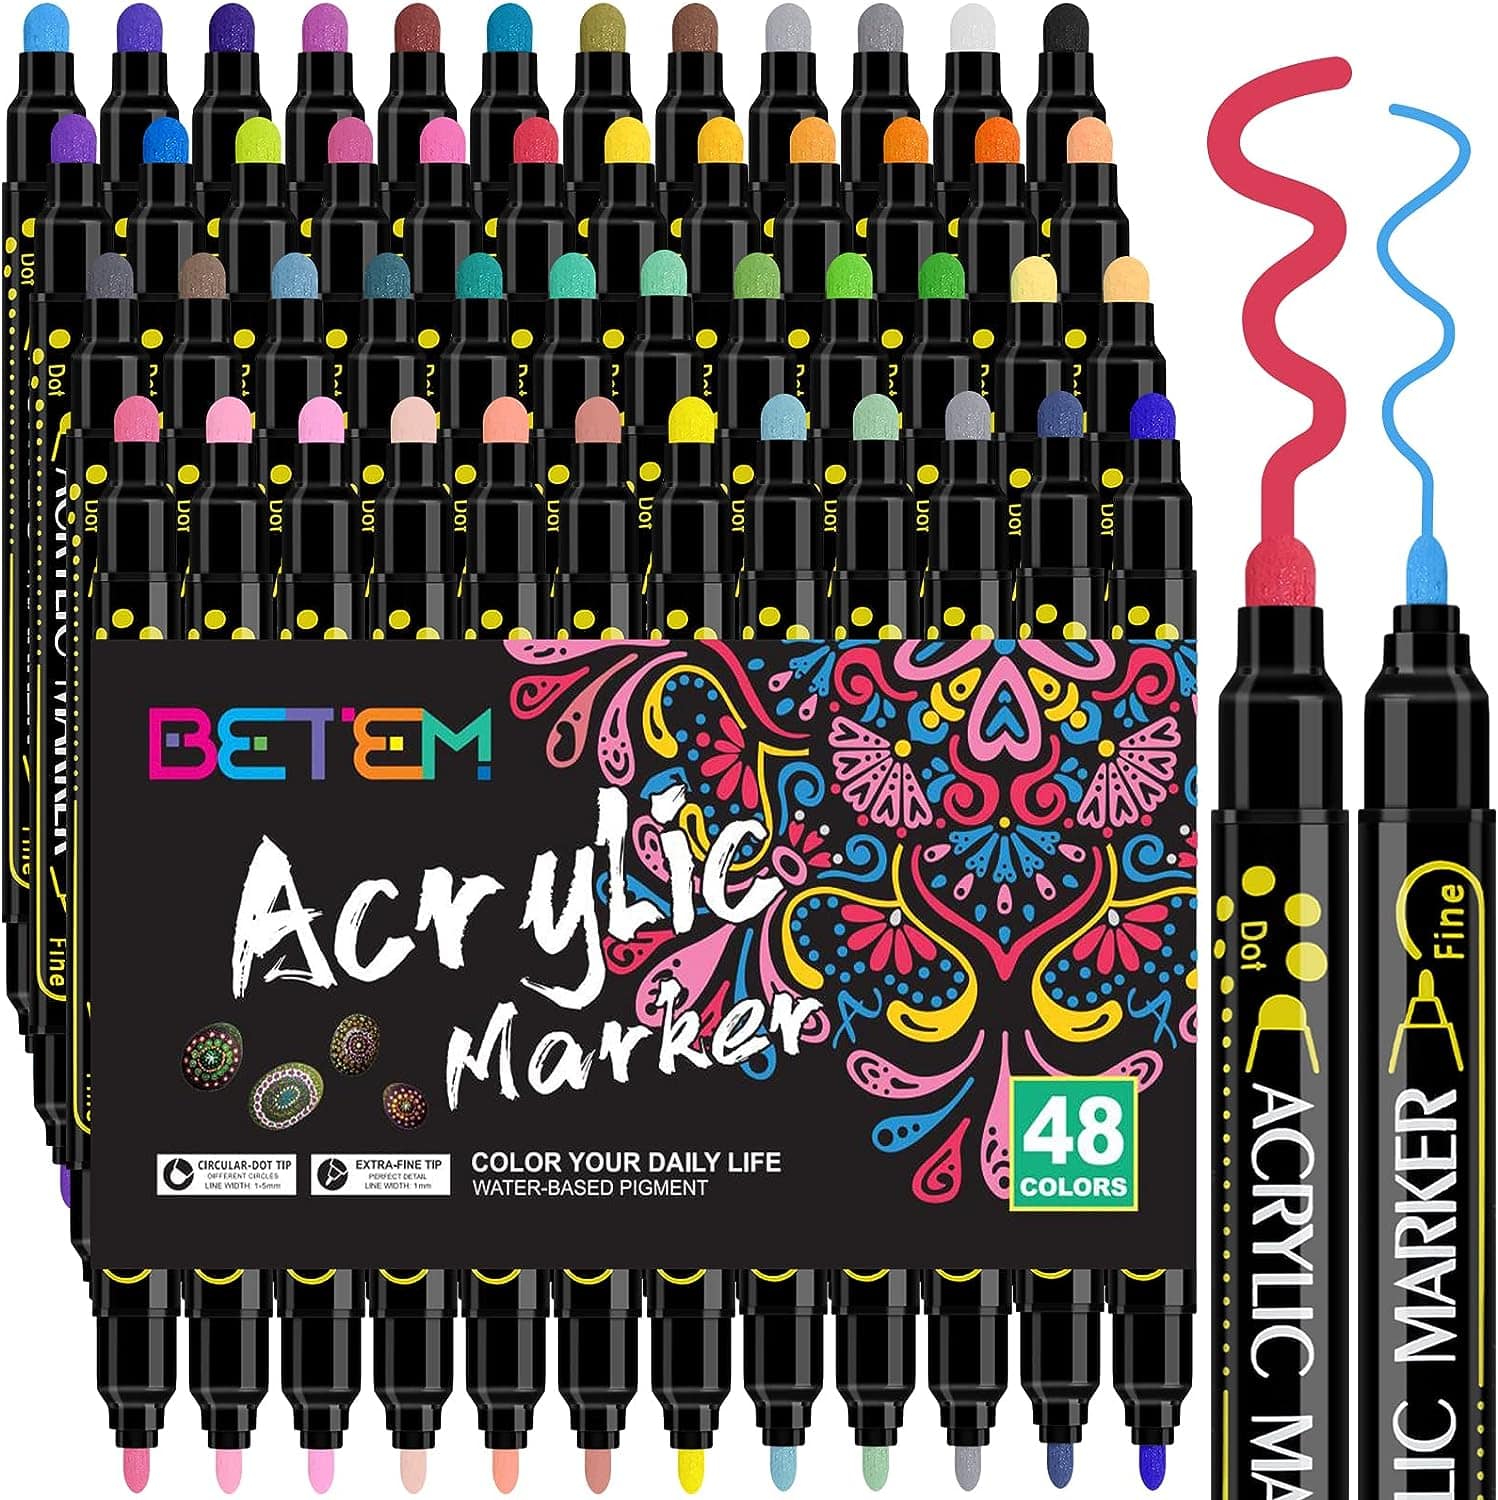 Acrylic Paint Pens, Emooqi 24 Colors Acrylic Paint Markers Paint